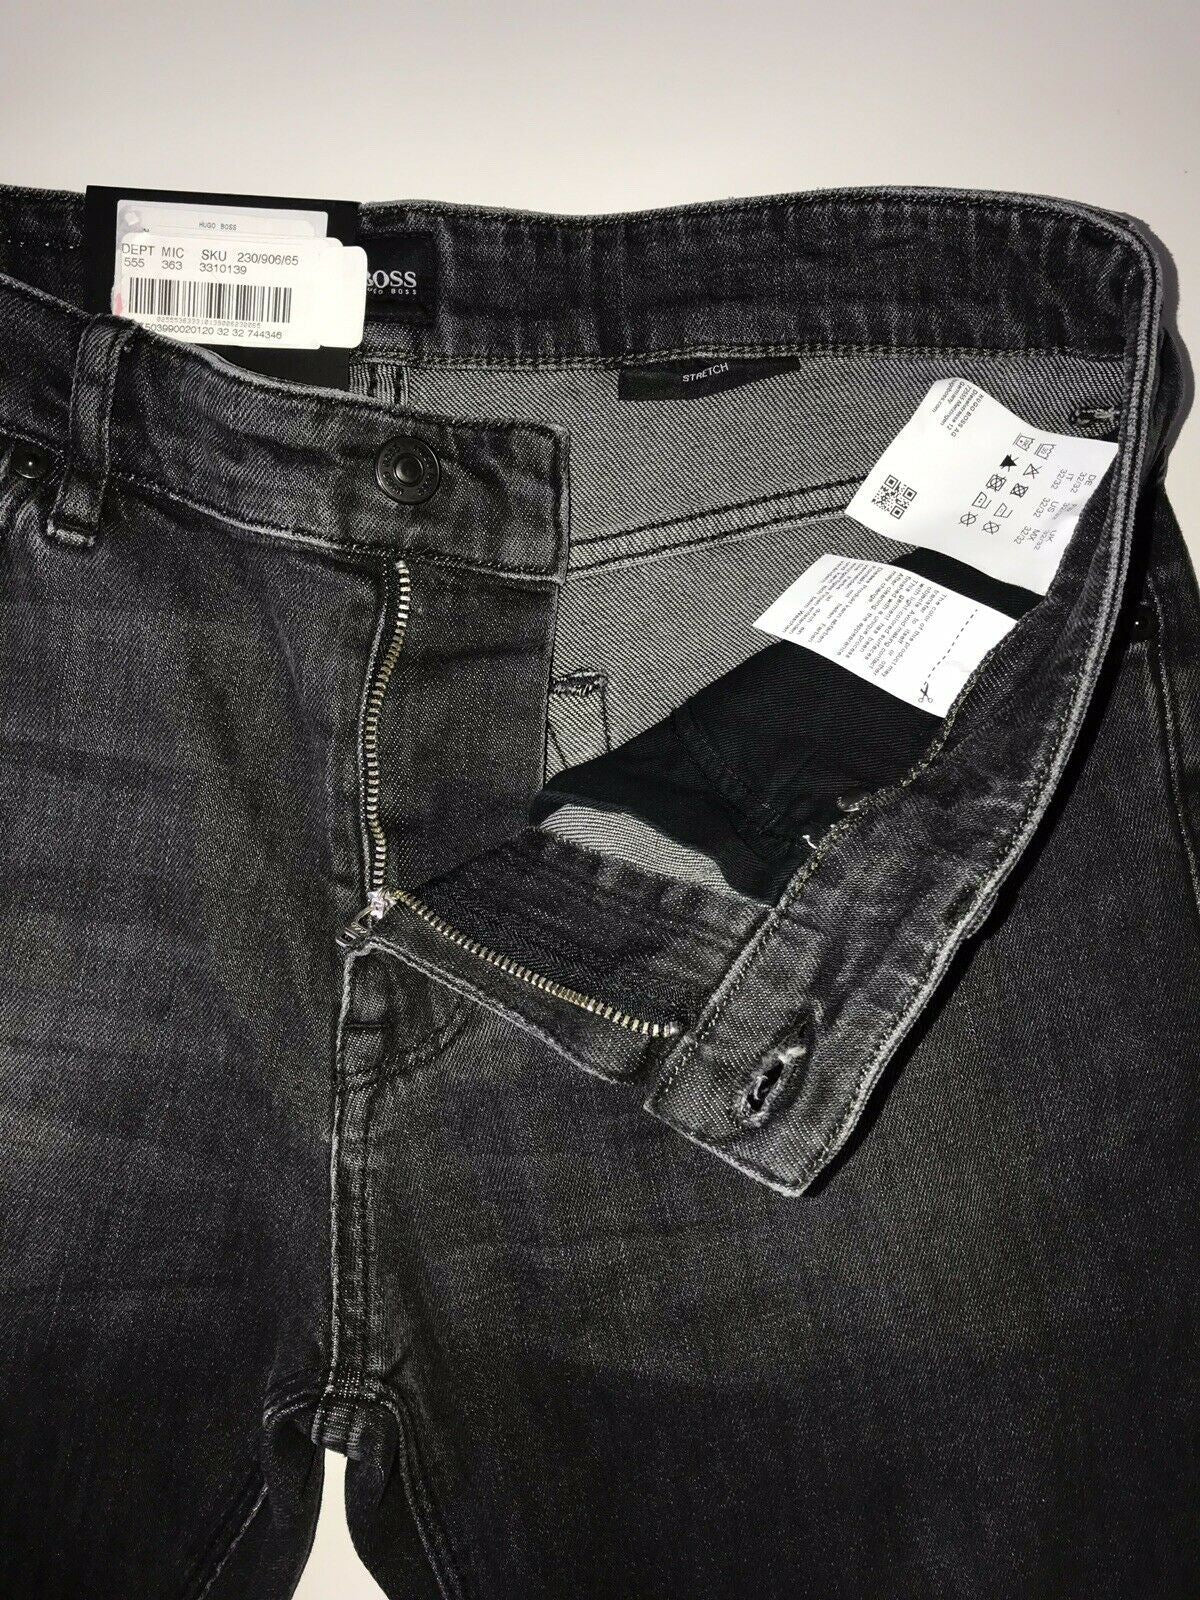 NWT $178 Hugo Boss Men's Maine Regular Fit Blue Jeans Pants Size 30/32